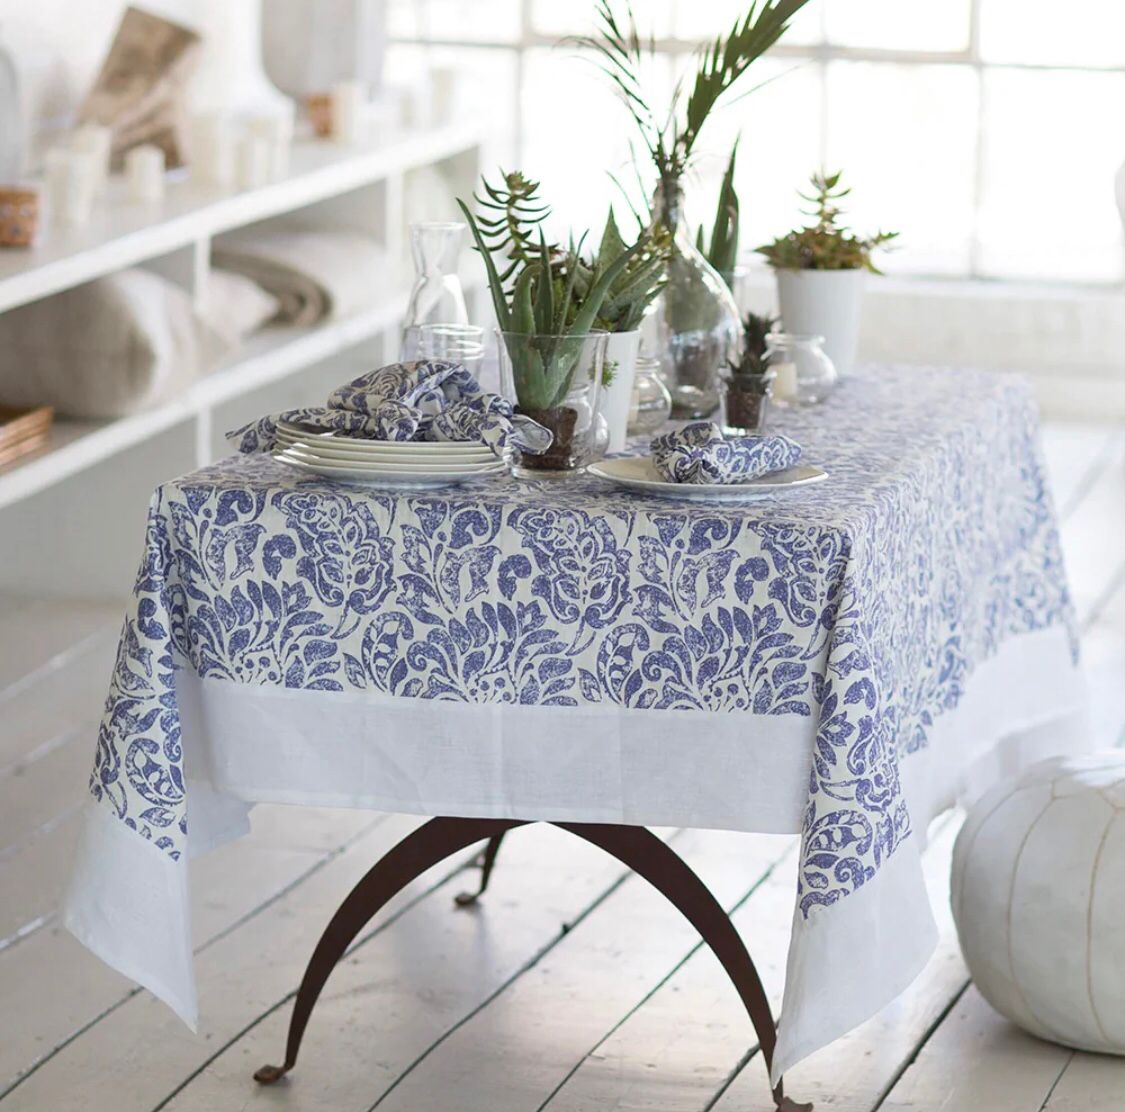 Santorini White & Blue Tablecloth 70x144 (Pre-Order)